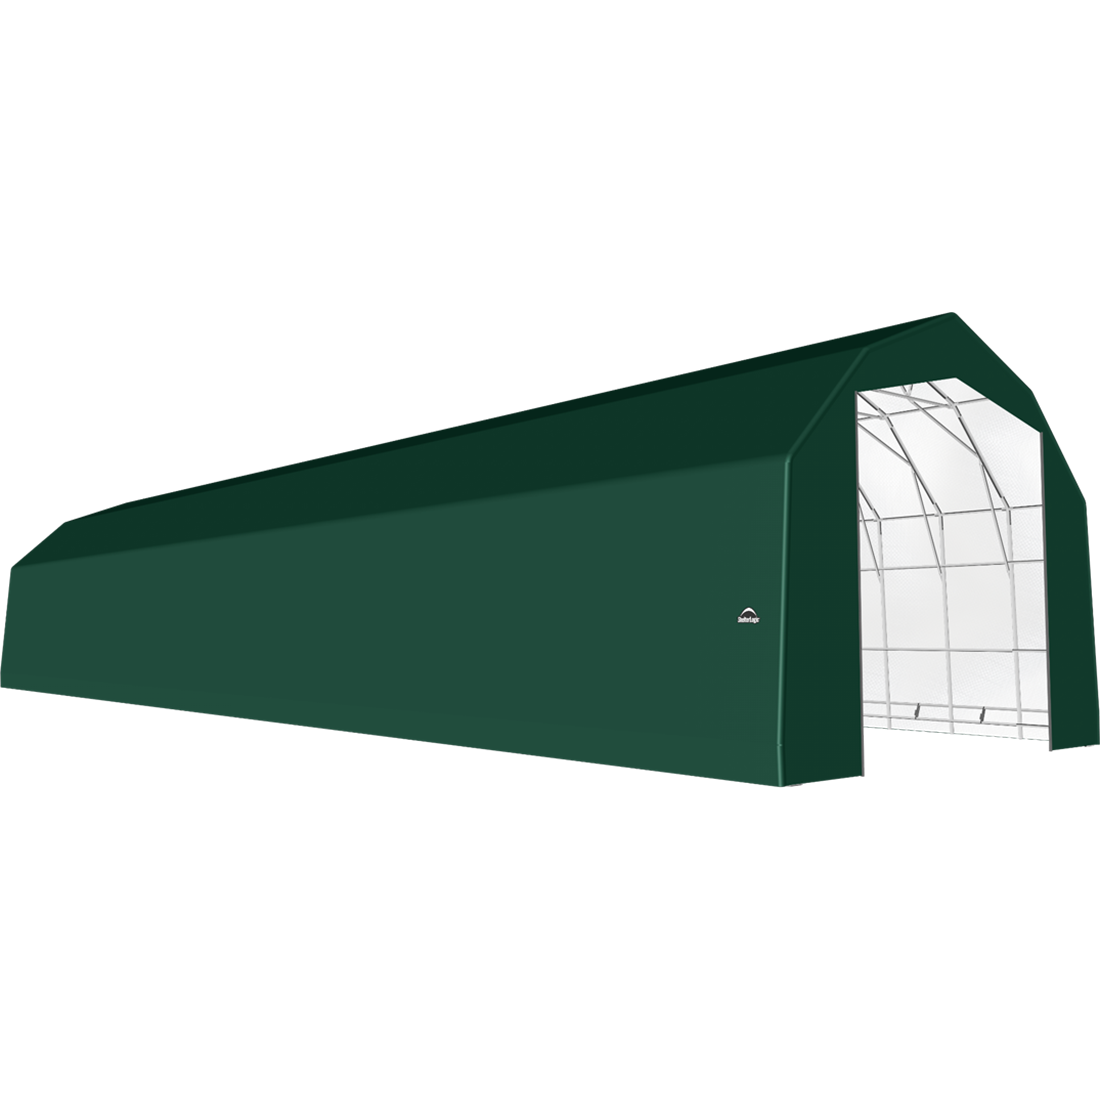 ShelterTech SP Series Barn Shelter, 25 ft. x 100 ft. x 20 ft. Heavy Duty PVC 14.5 oz. Green